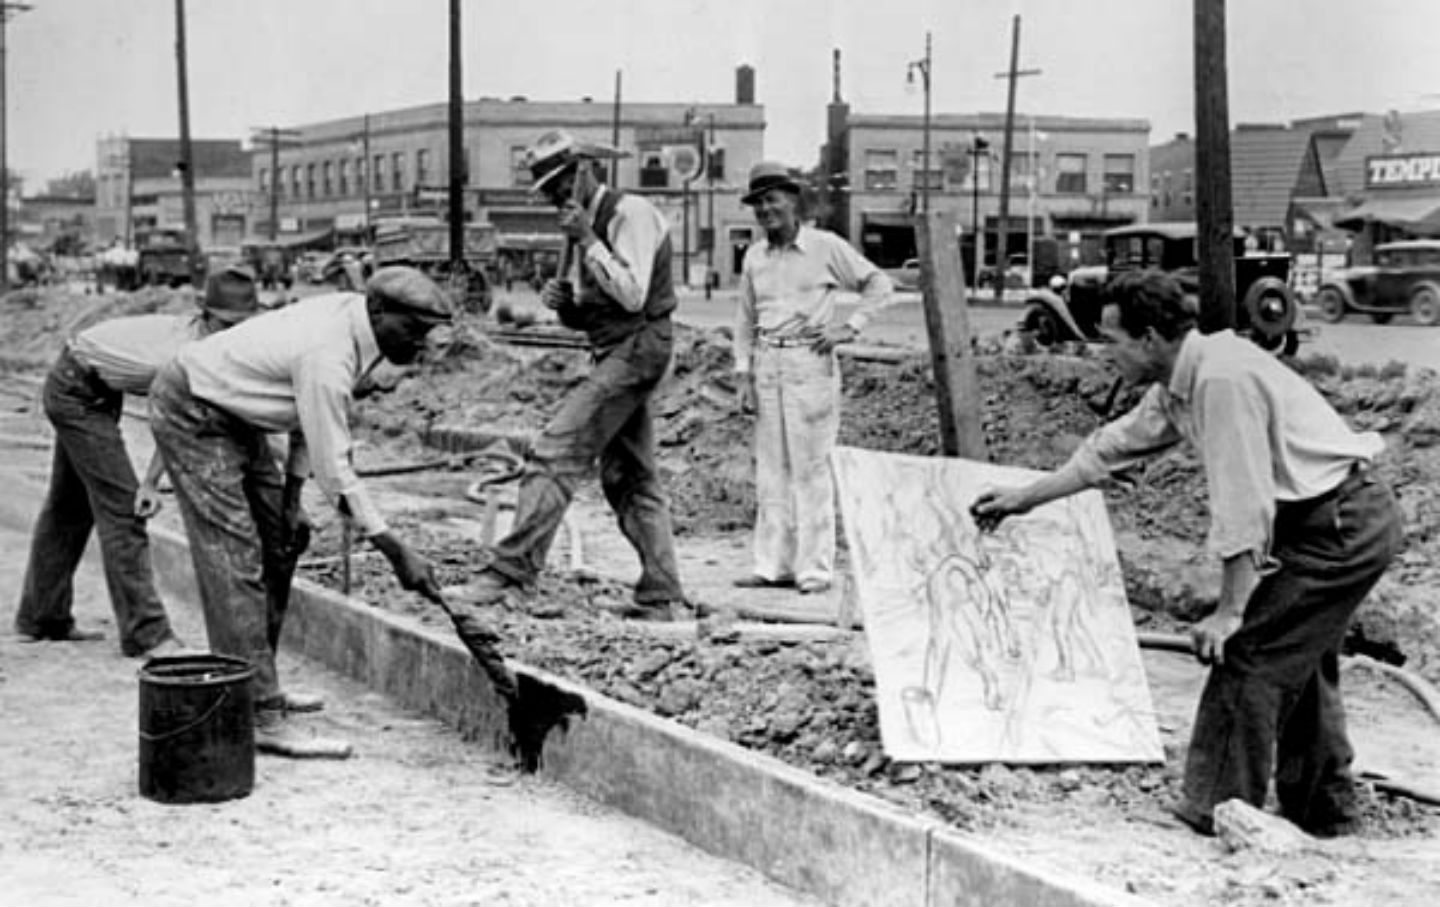 April 8, 1935: FDR Forms the Works Progress Administration